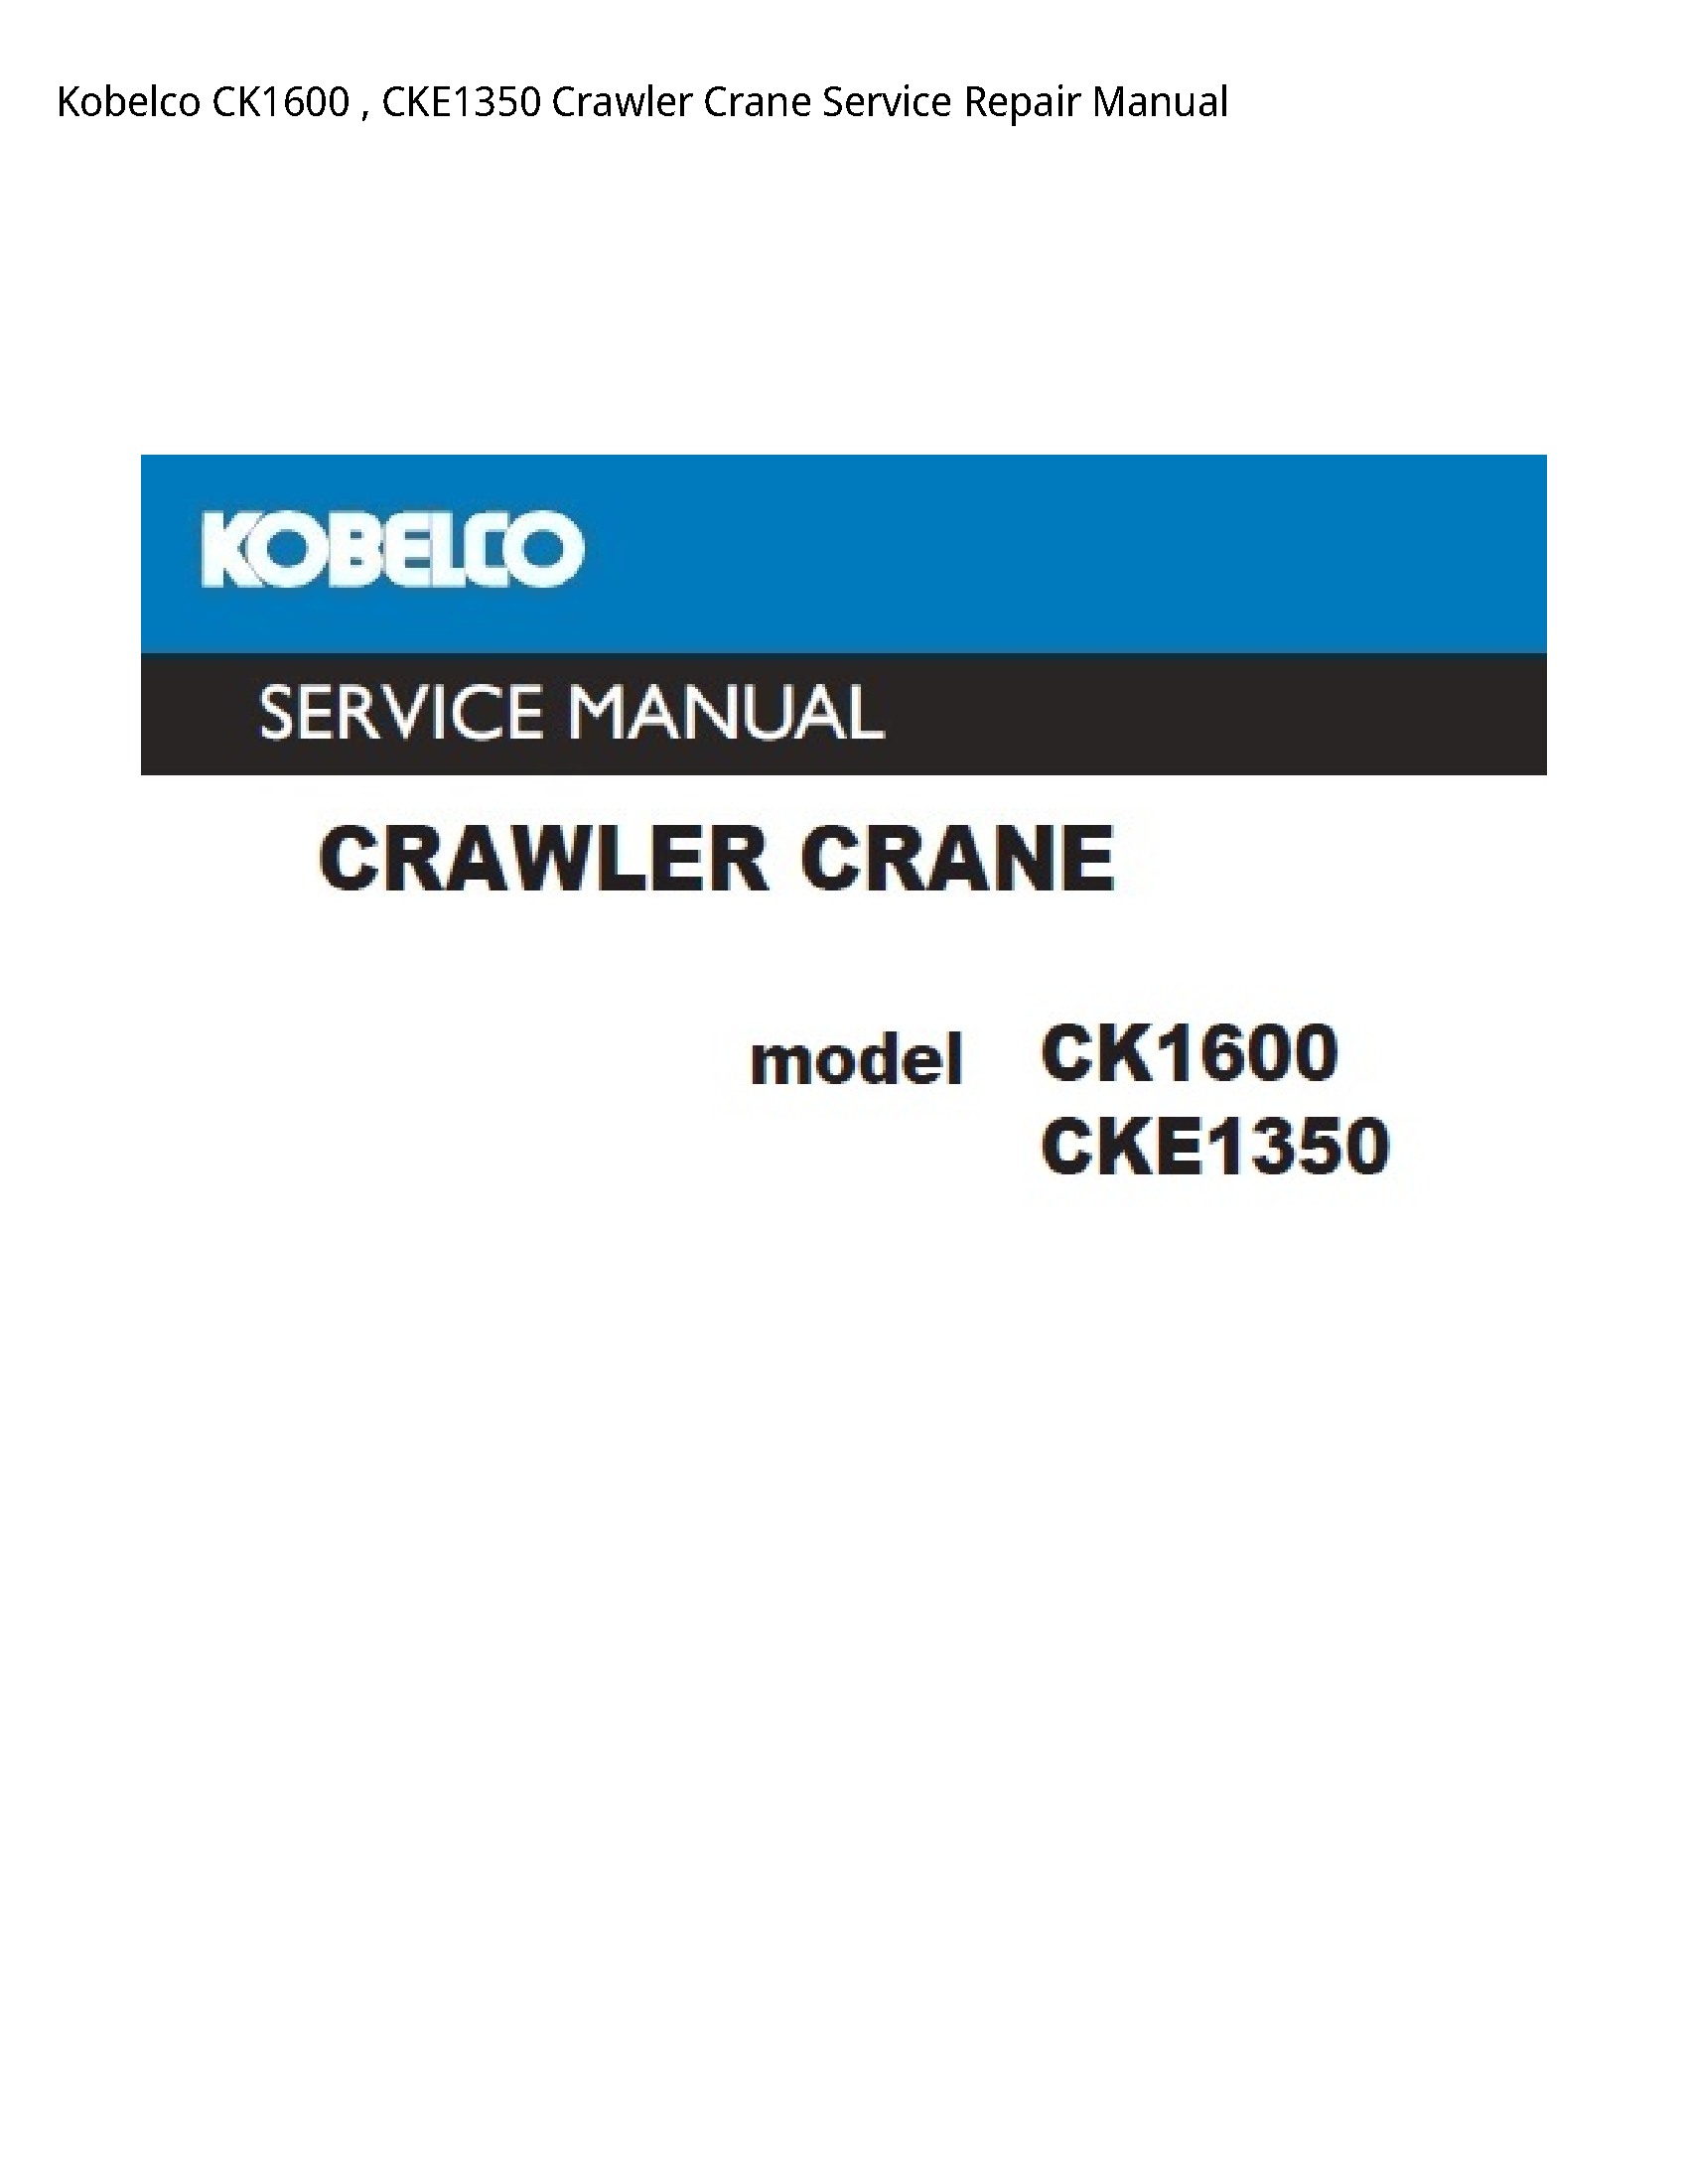 Kobelco CK1600 Crawler Crane manual